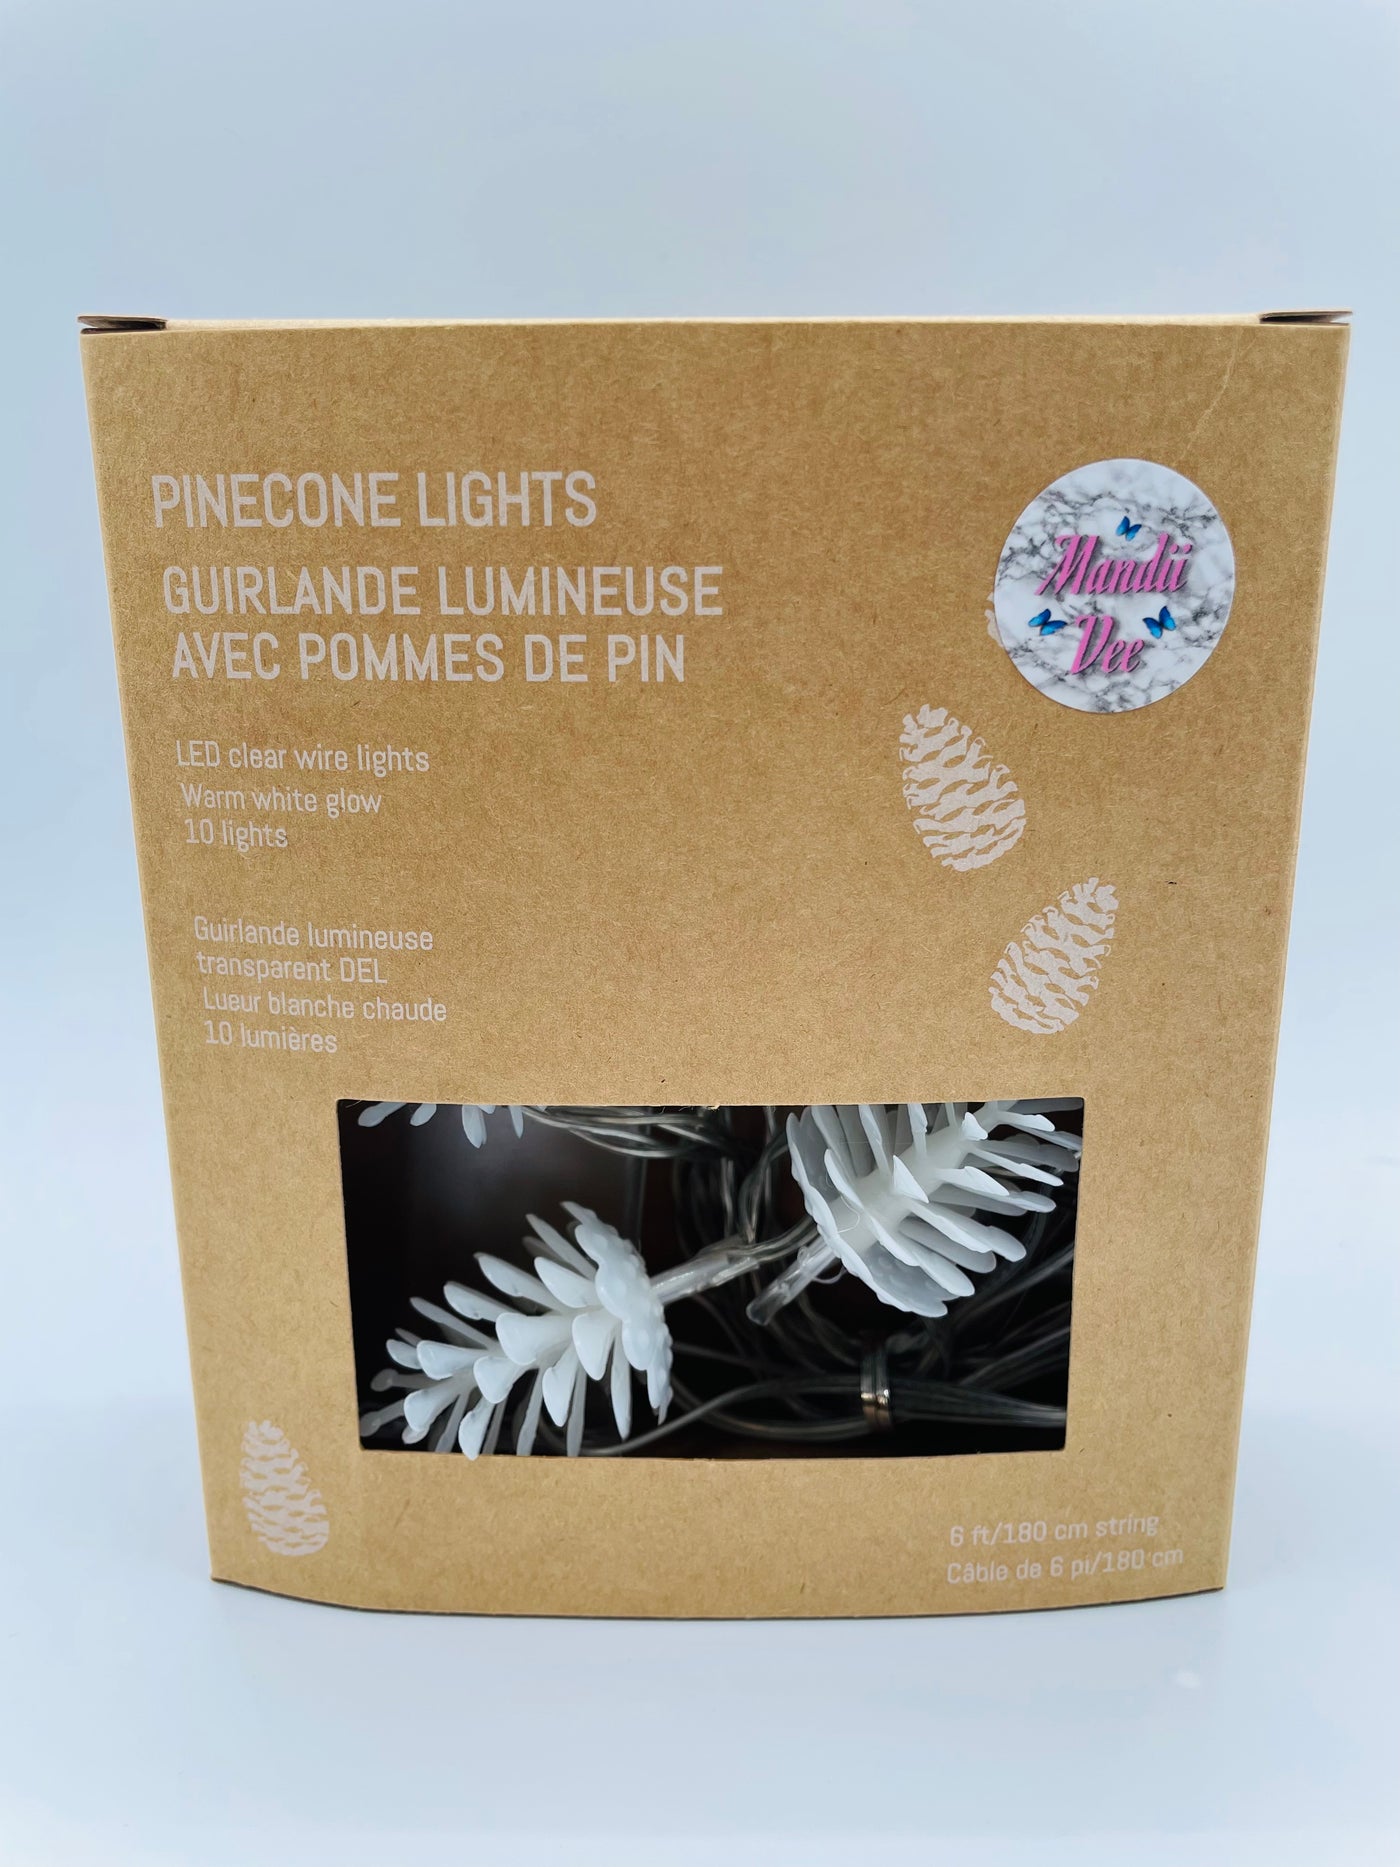 Pinecone Lights